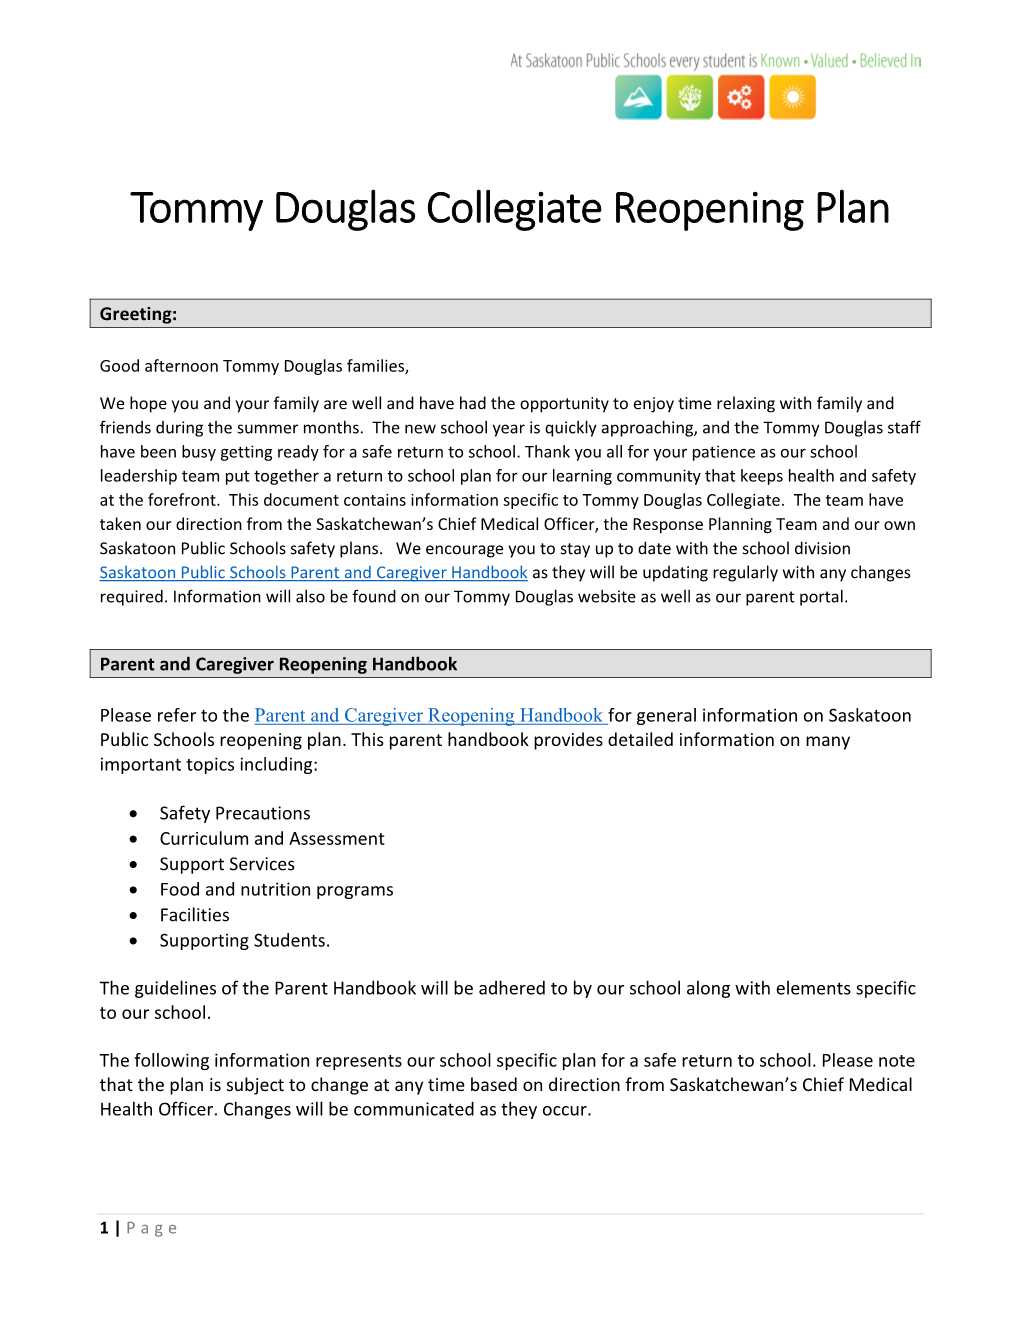 Tommy Douglas Collegiate Reopening Plan